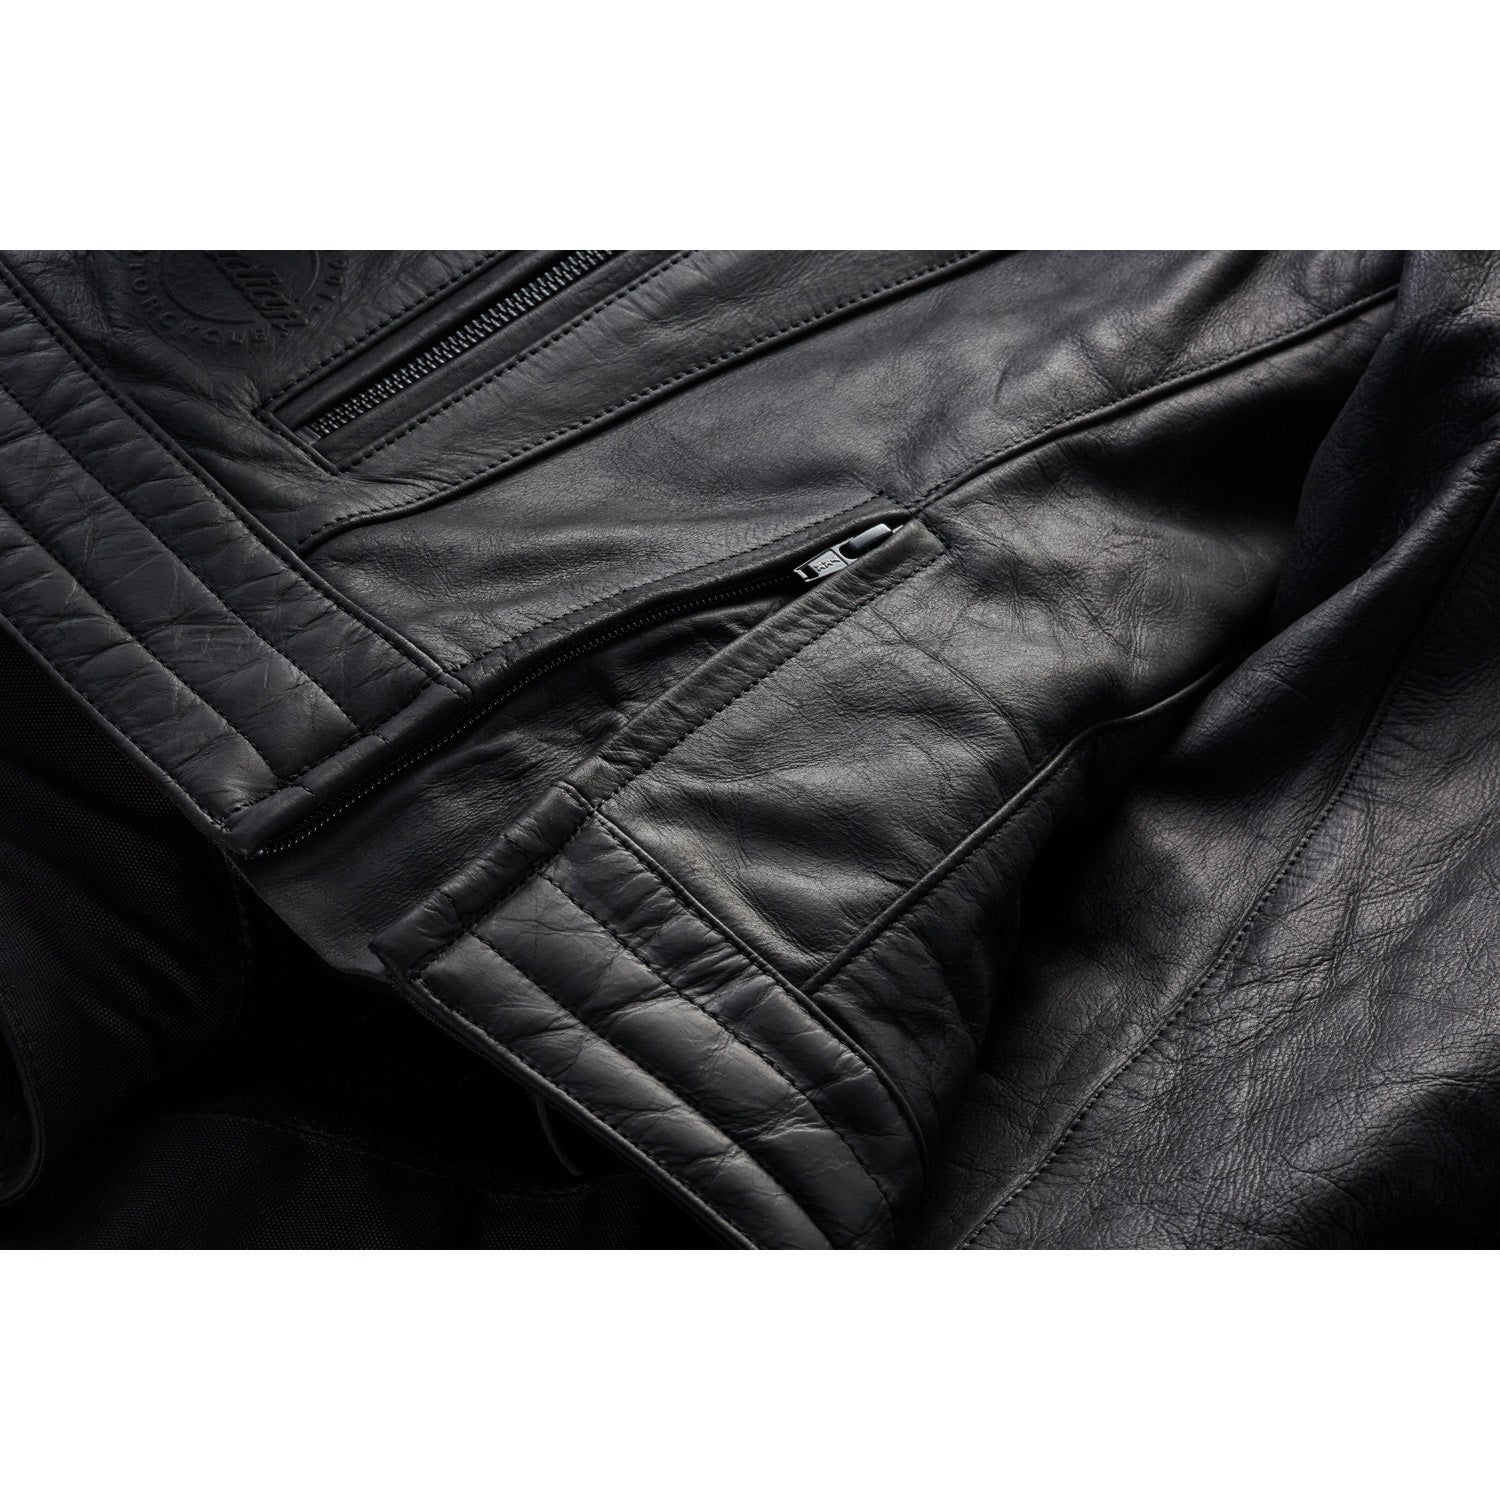 Men's Leather Denton Jacket, Black